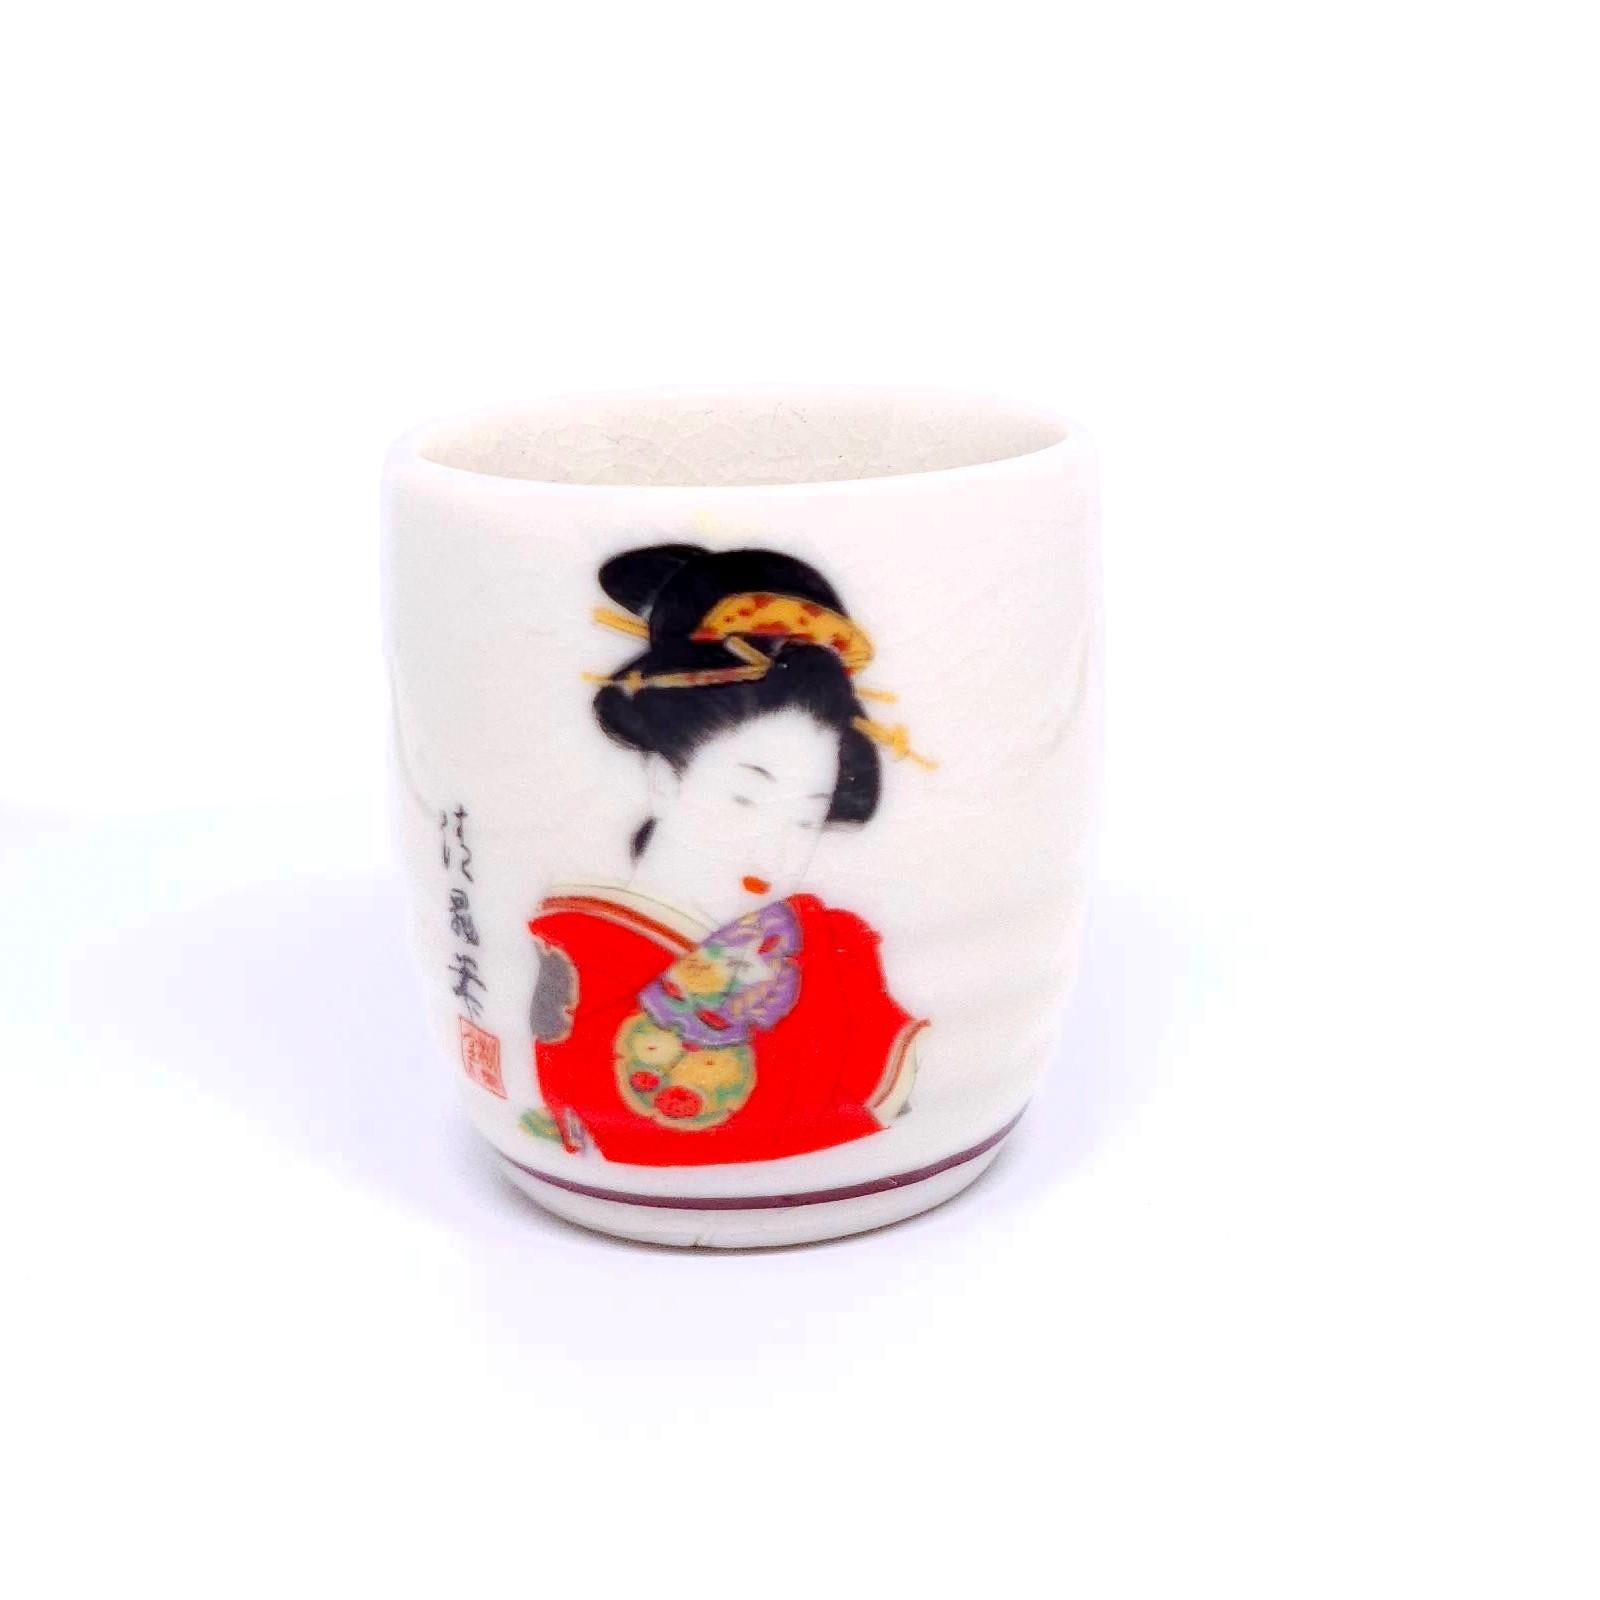 Vintage Japanese Hand Painted Ceramics Sake Set Geisha New in Box Made in Japan 1